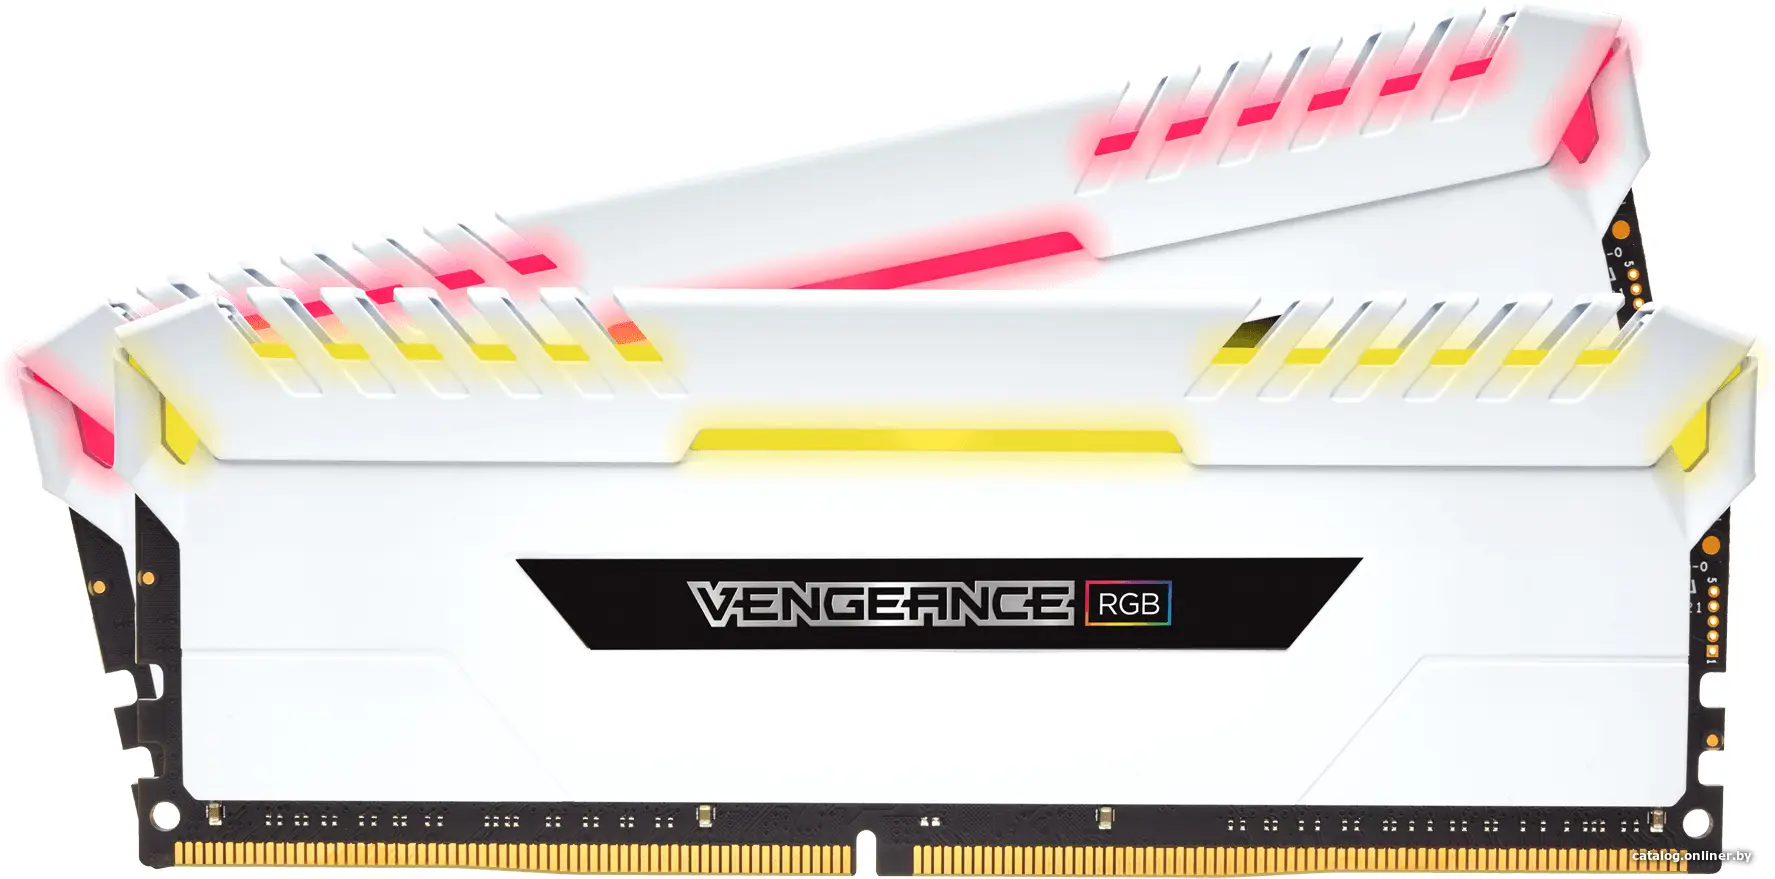 Оперативная память Corsair Vengeance RGB 2x8GB DDR4 PC4-24000 [CMR16GX4M2C3000C15]